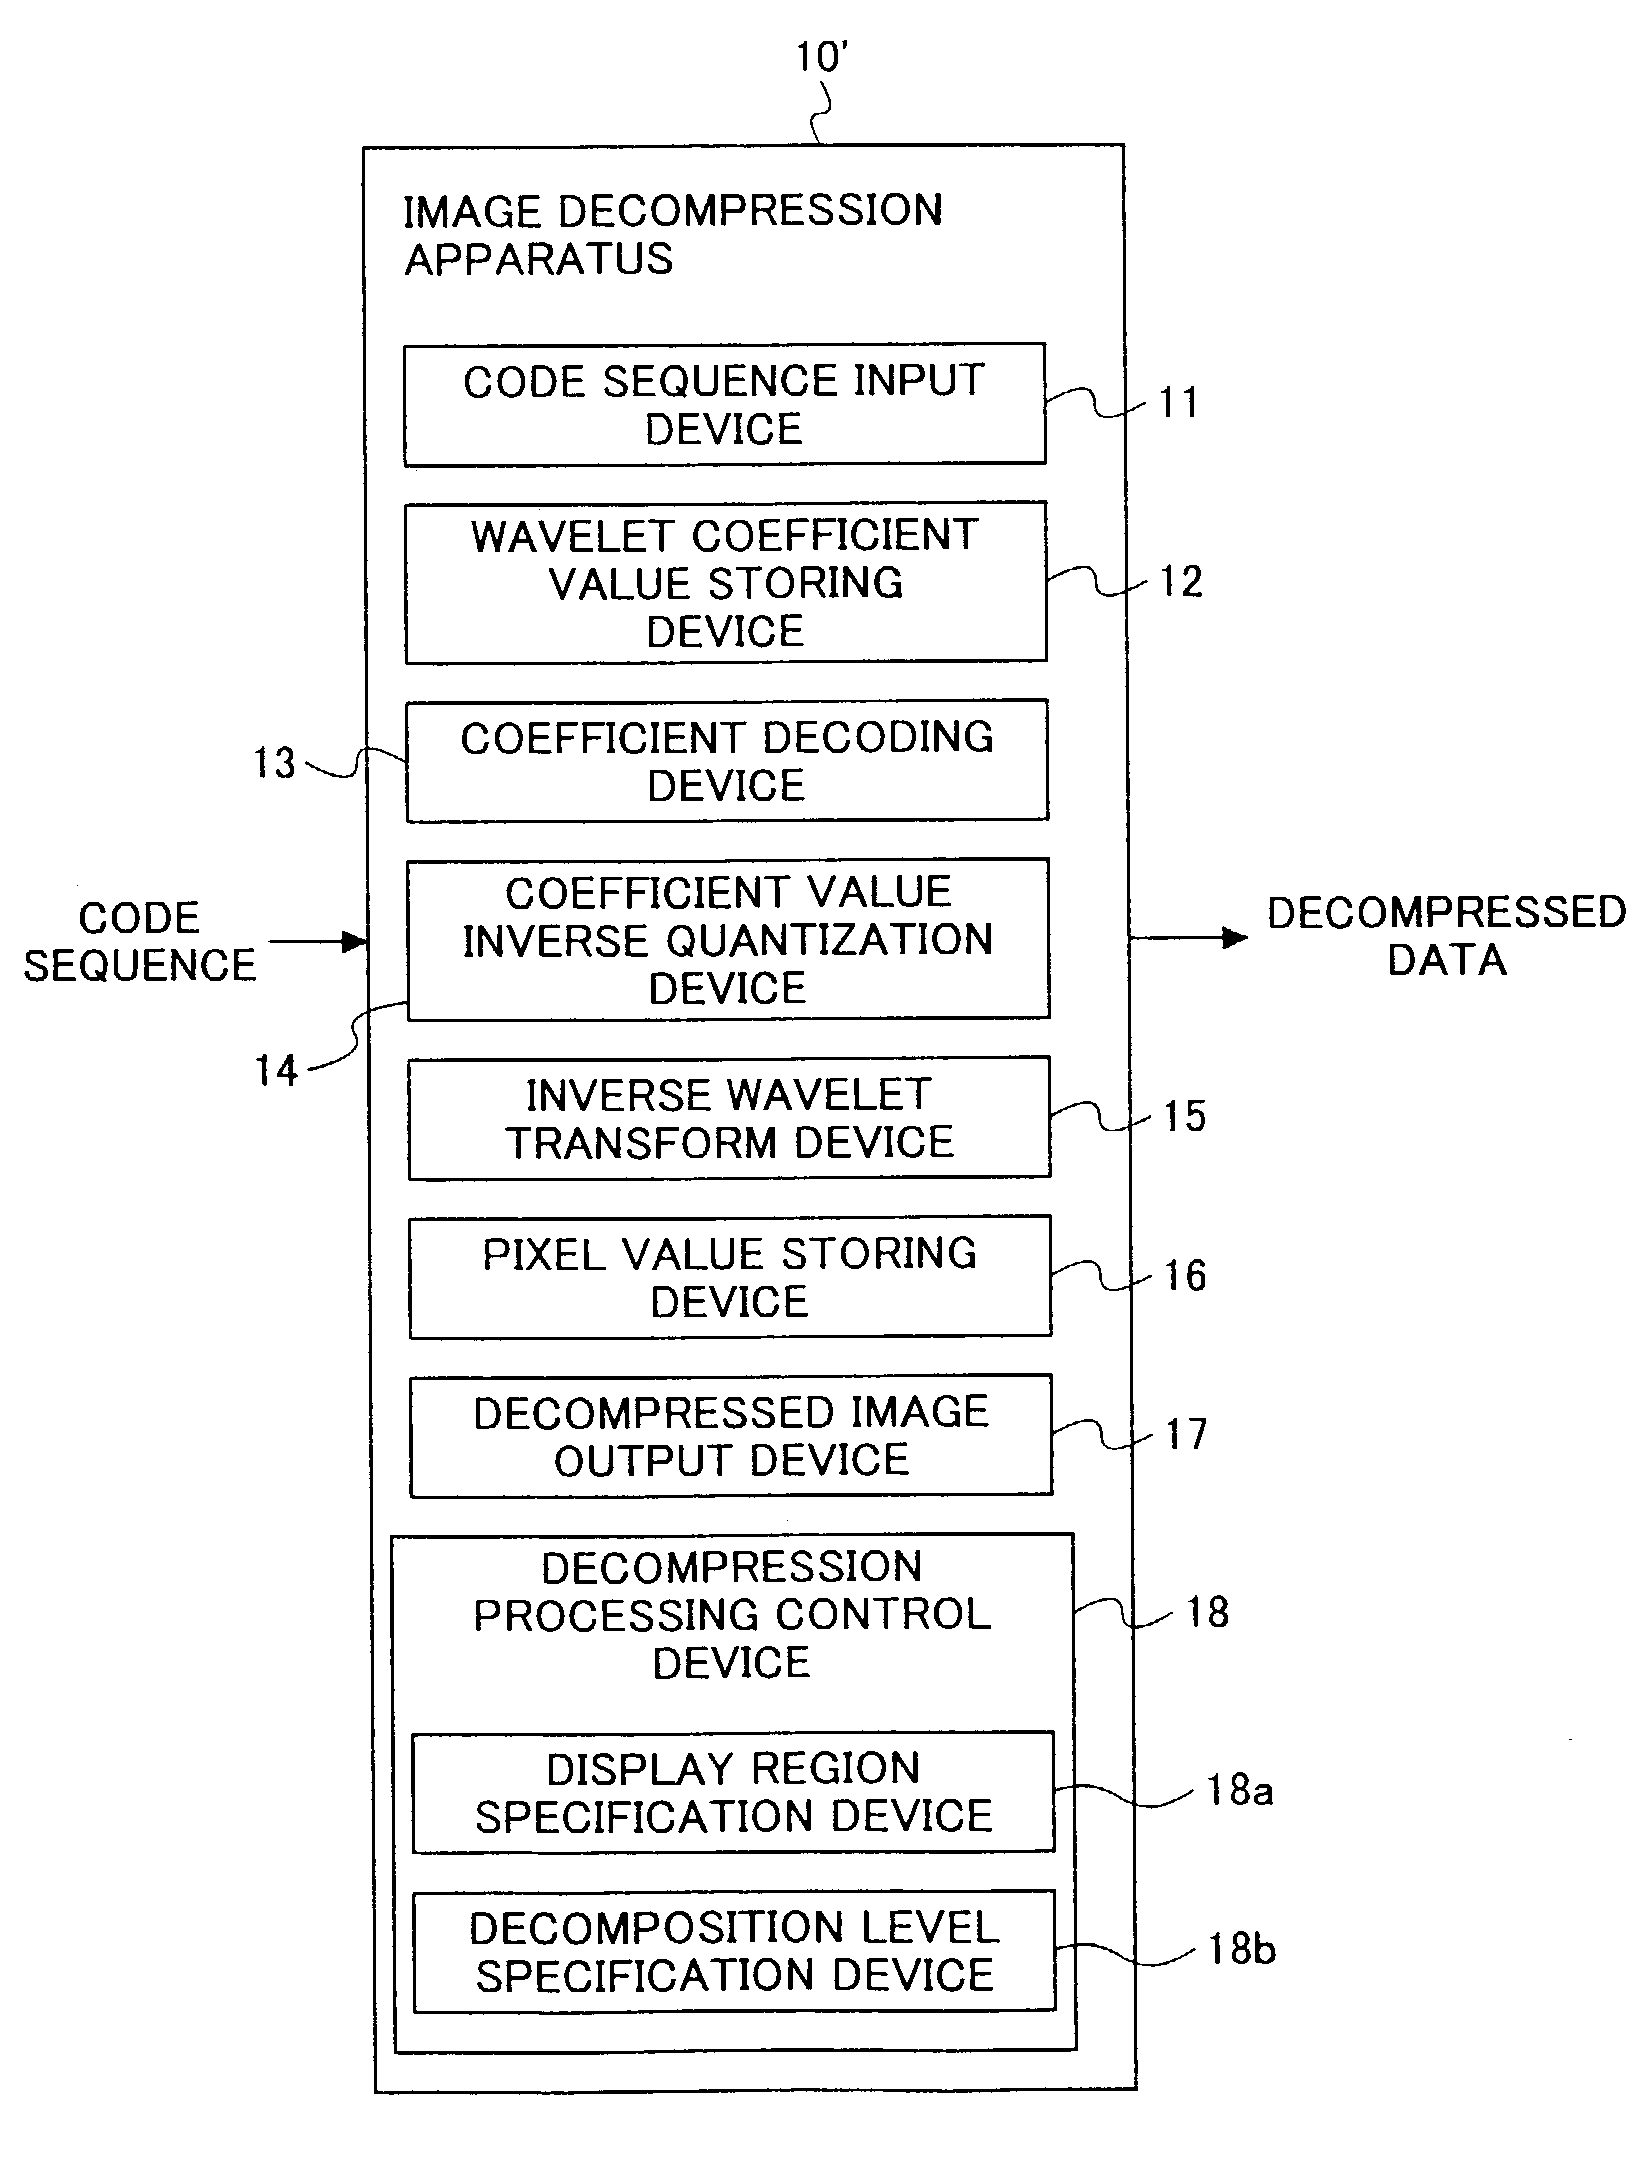 Image decompression apparatus and method